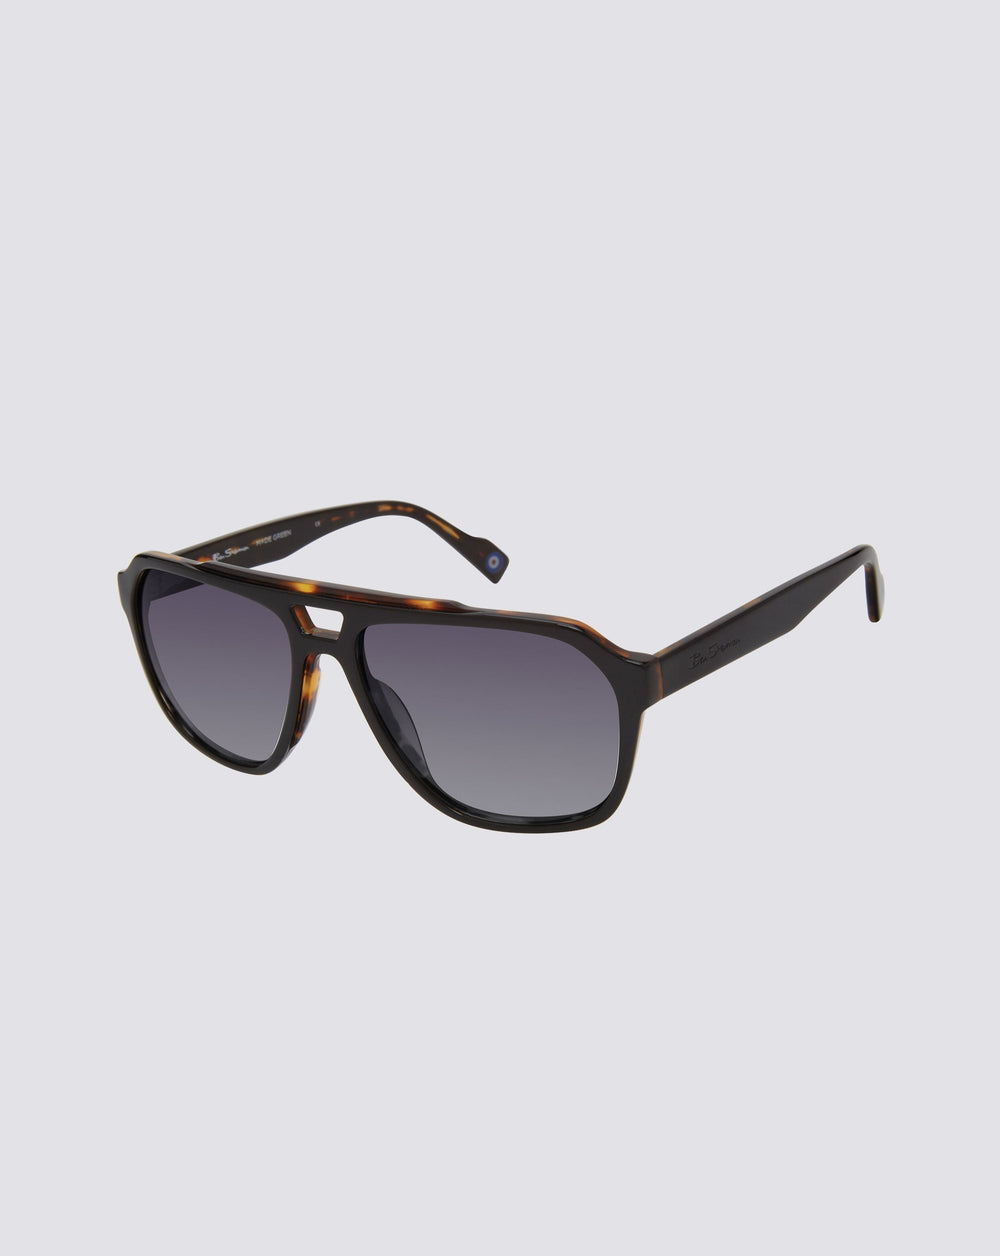 Manor Polarized Oversized Eco Sunglasses - Black Tortoise - Ben Sherman